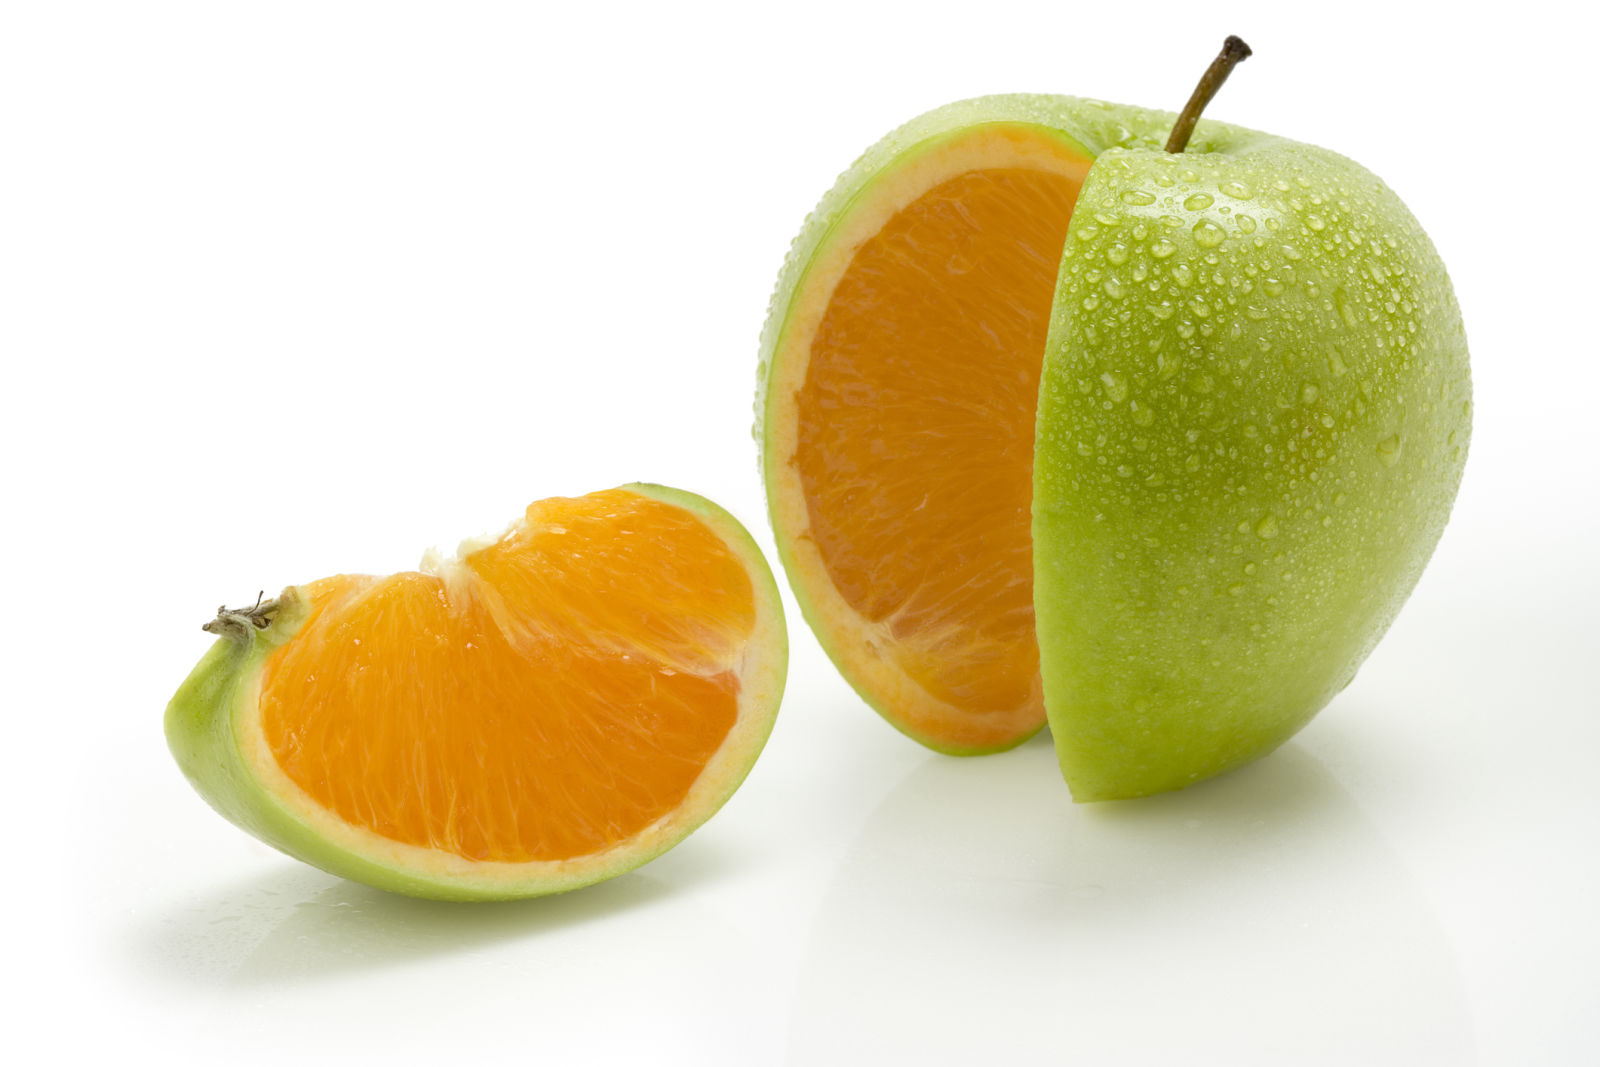 Apple and oranges